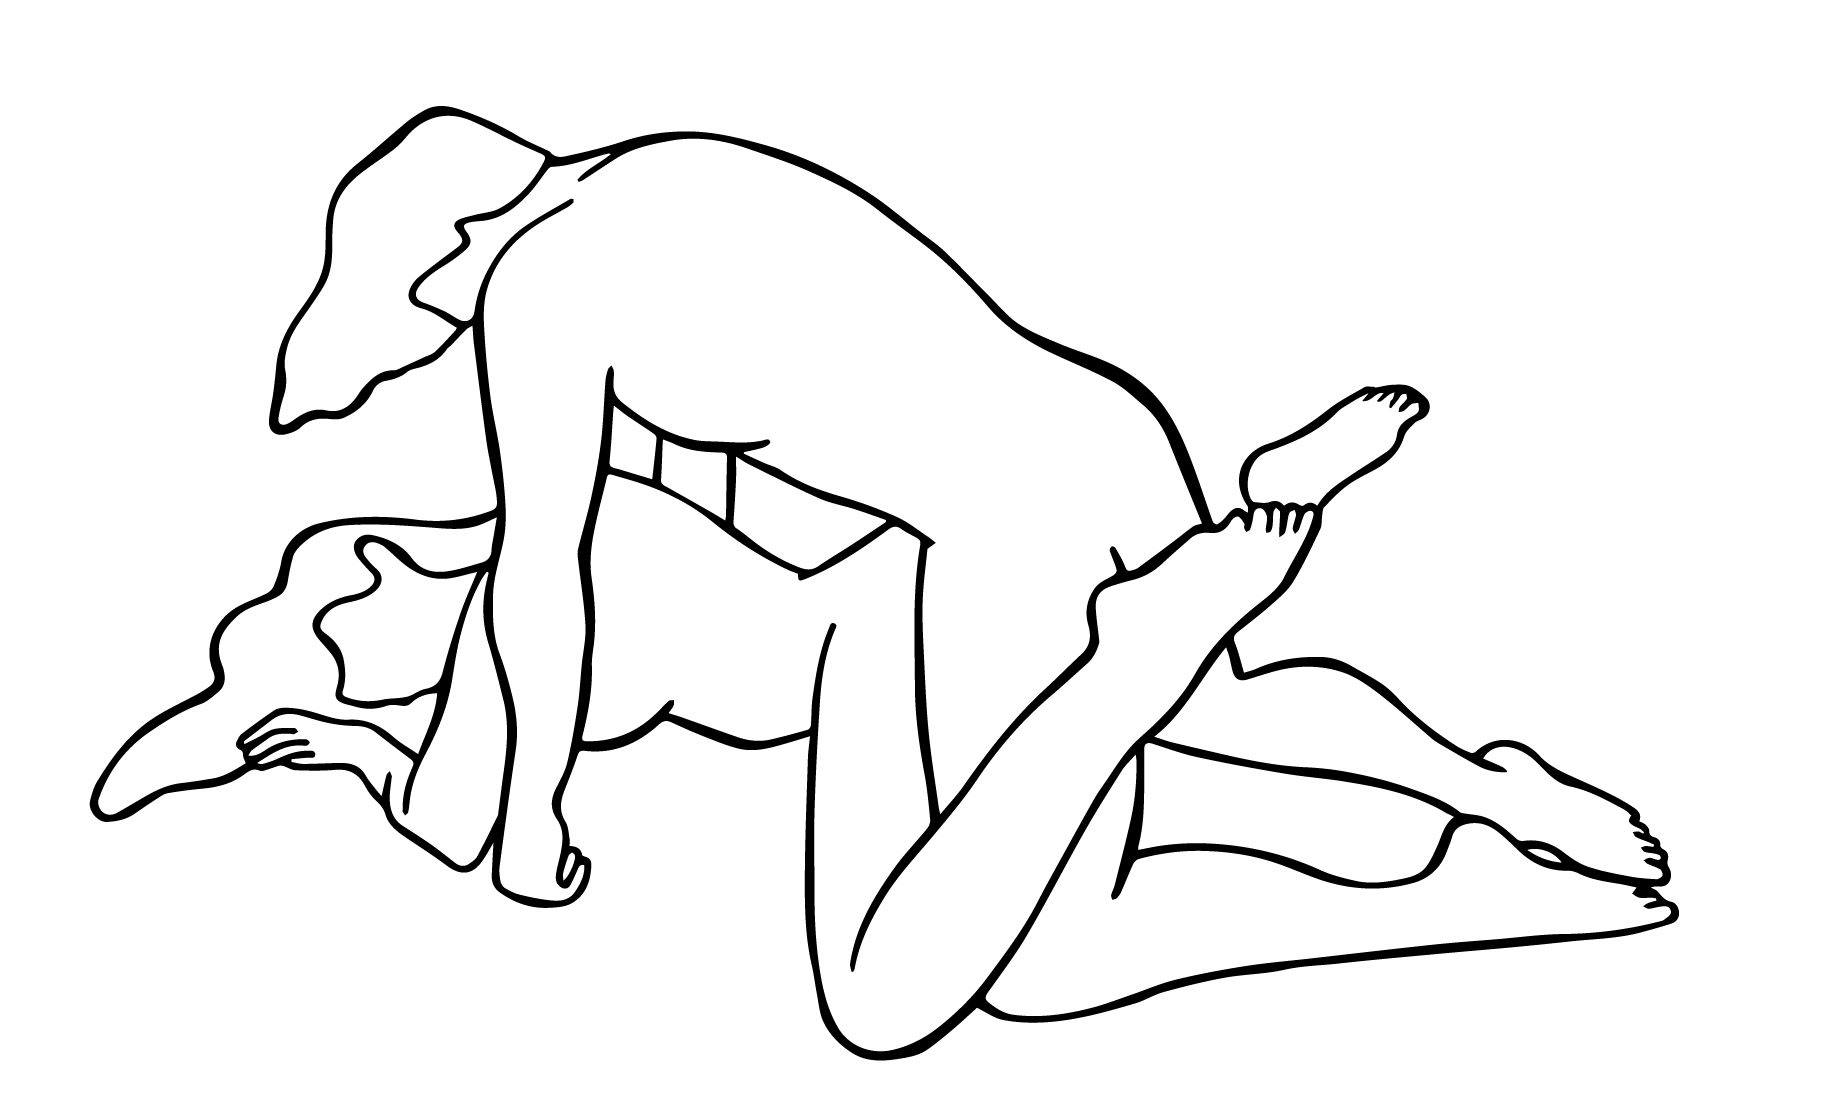 Illustration of flat iron sex position